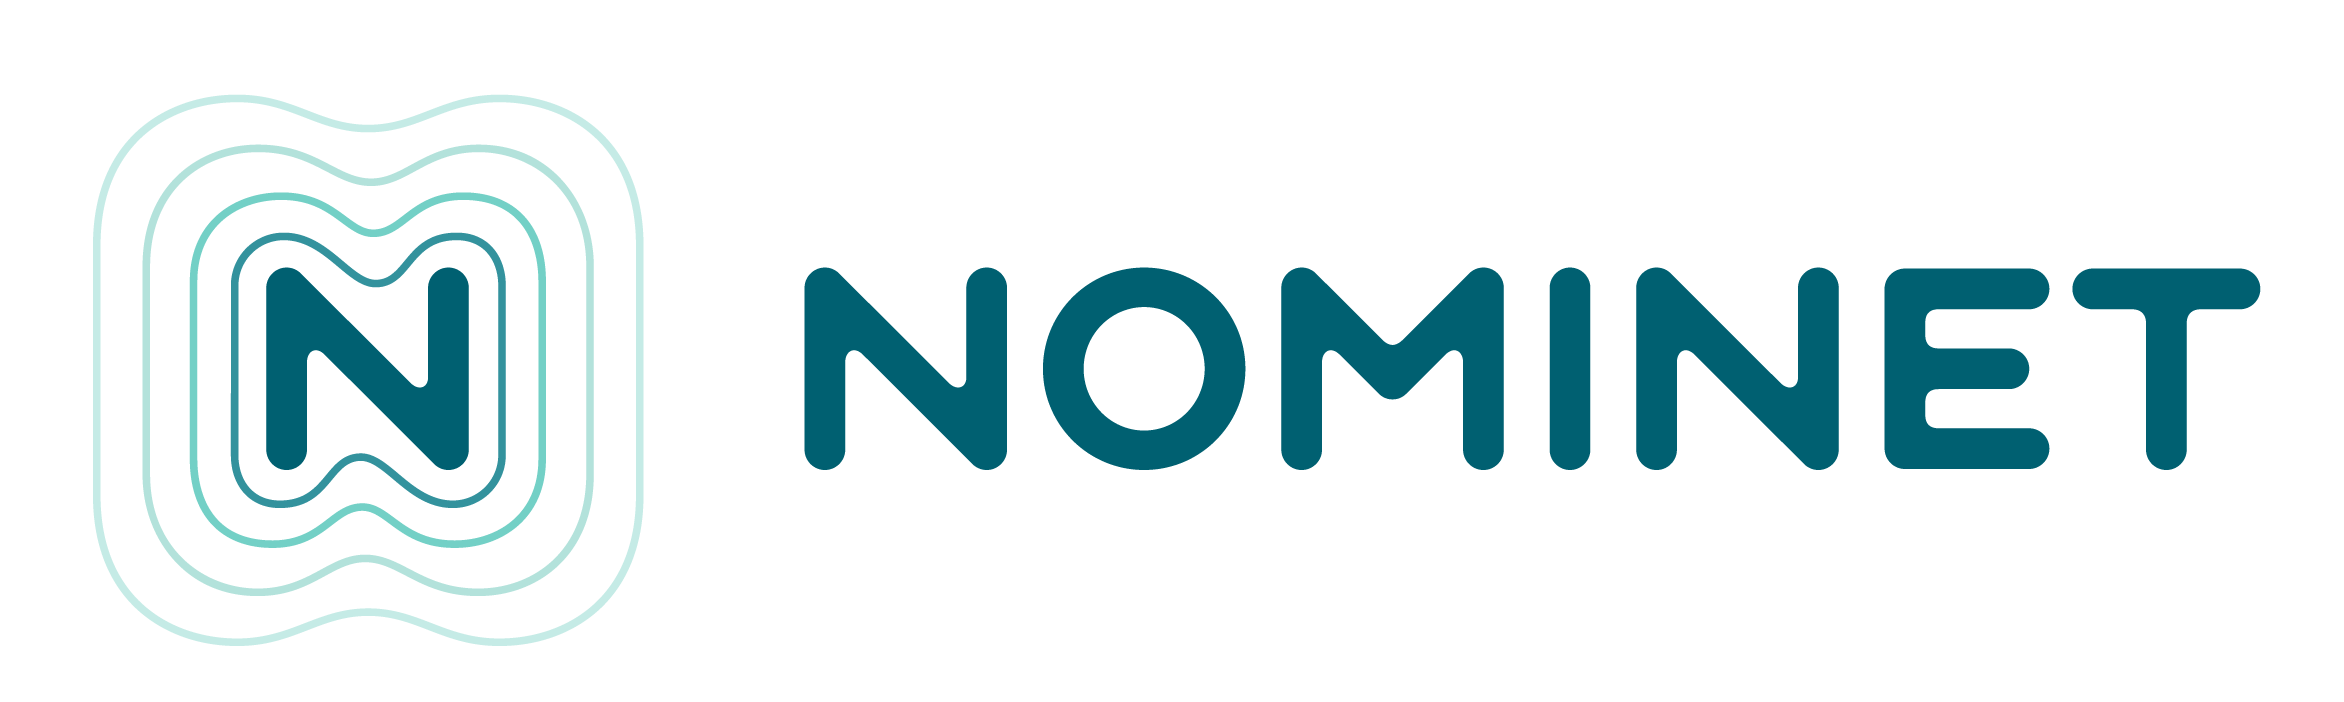 Nominet profile and vacancies